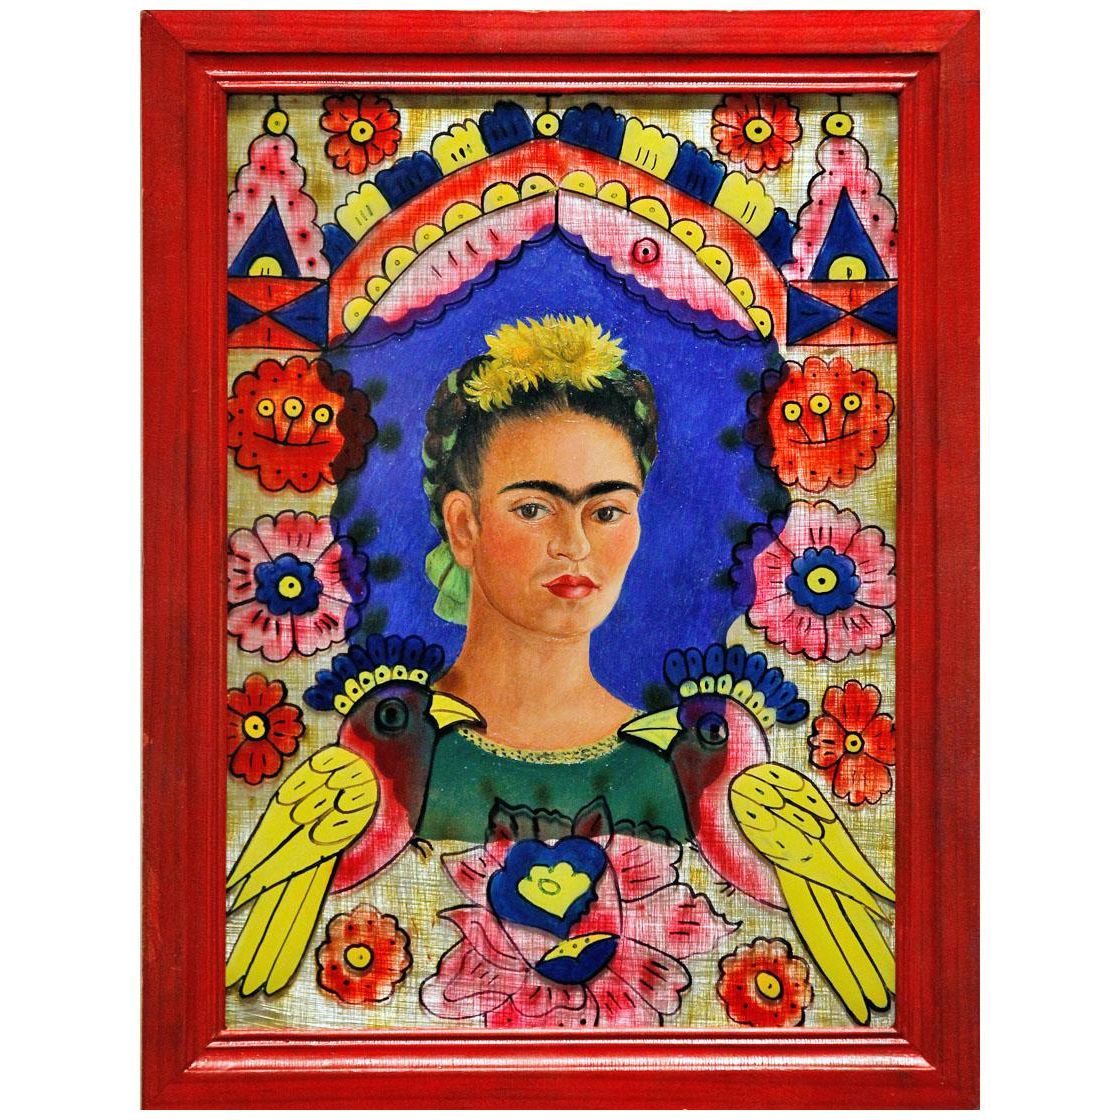 Frida Kahlo. El marco. 1938. Centre Pompidou Paris